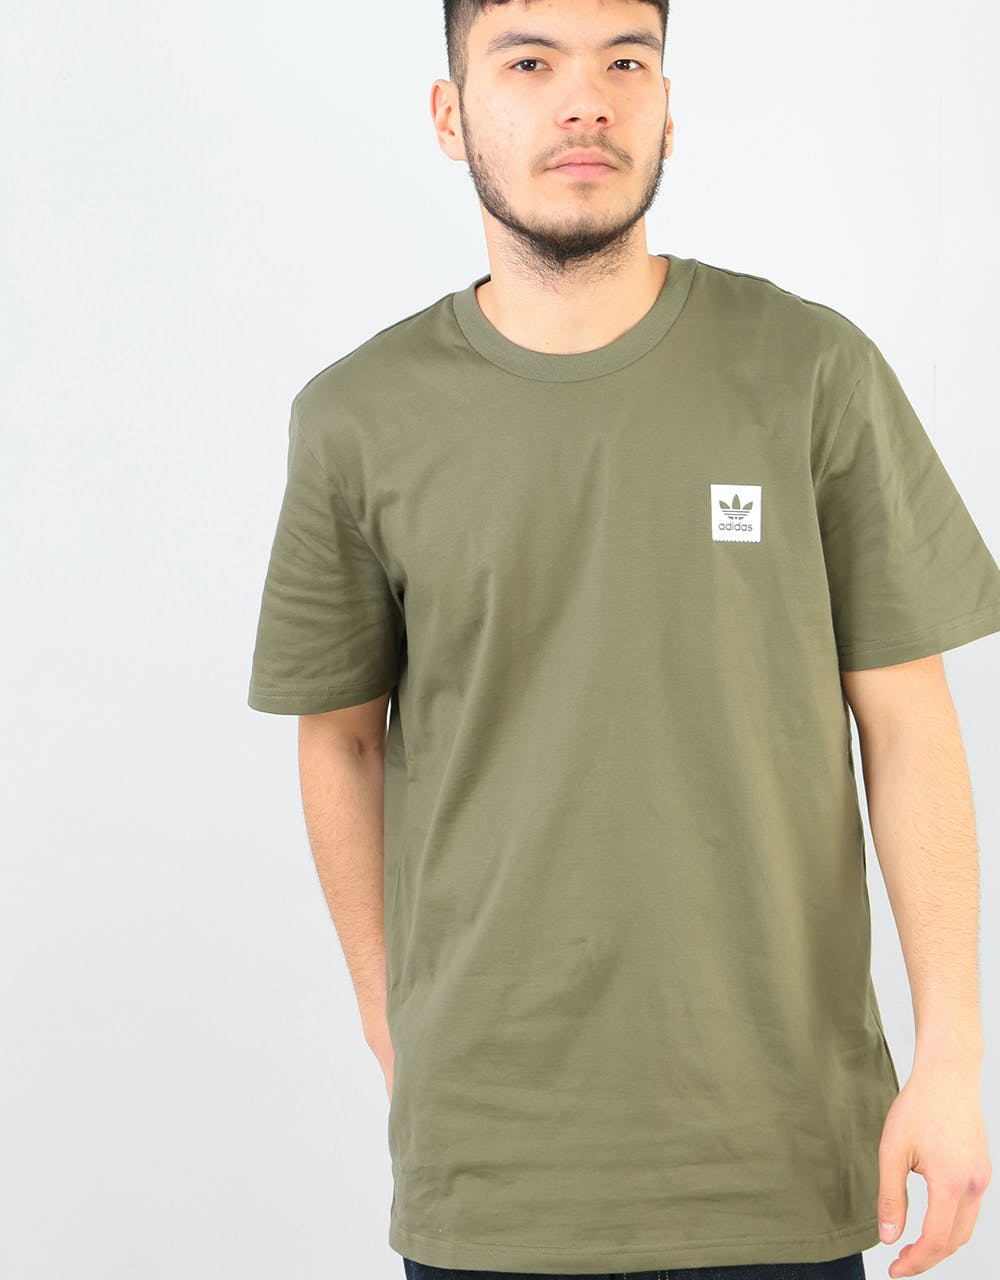 Adidas BB 2.0 T-Shirt - Raw Khaki